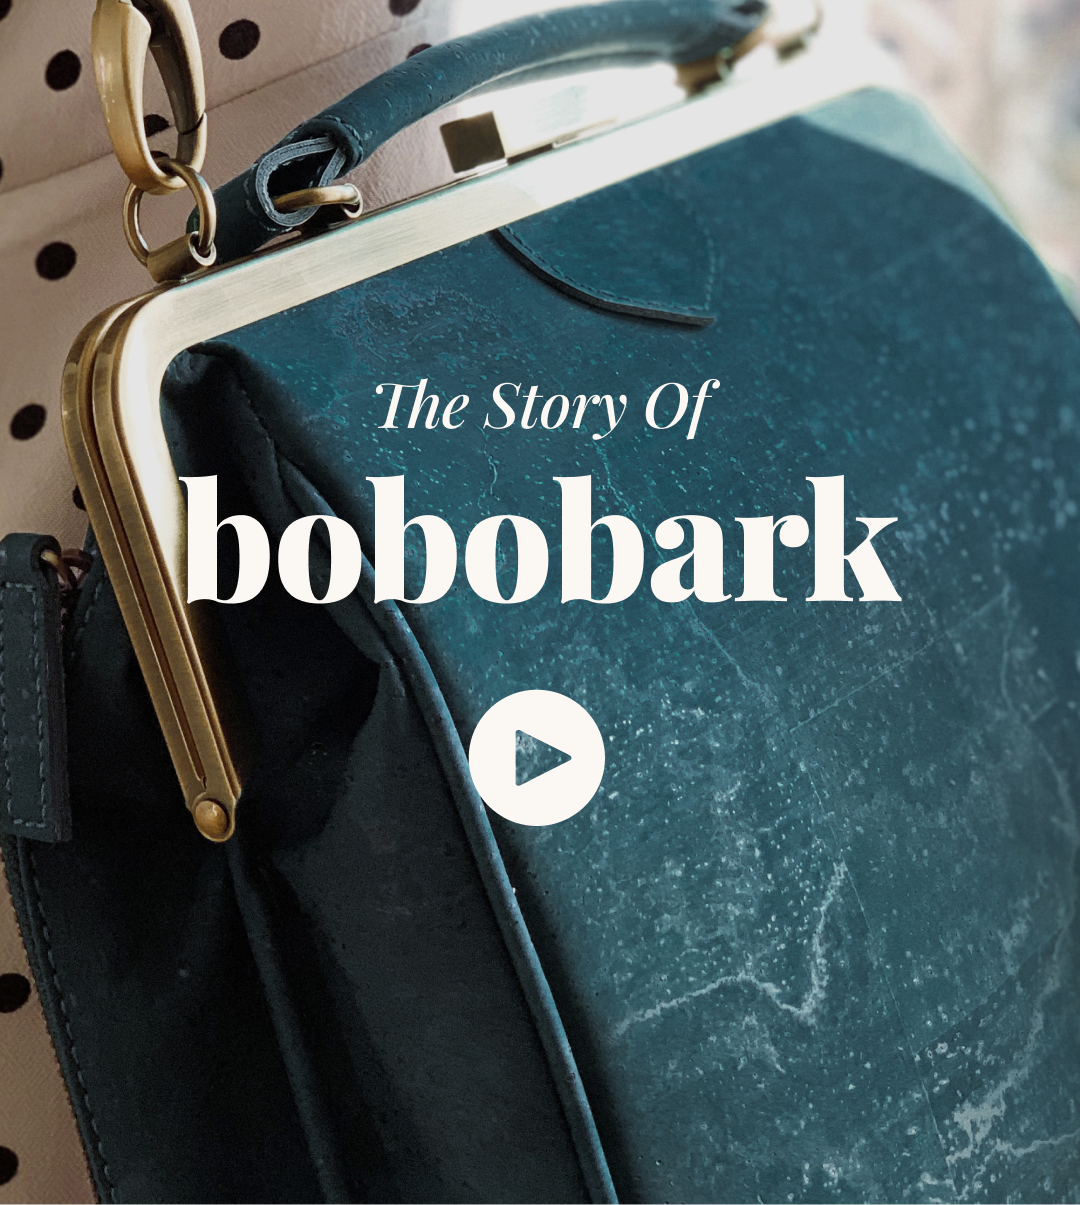 bobobark. Chic, Elegant & Modern. Fused with Parisian Charm